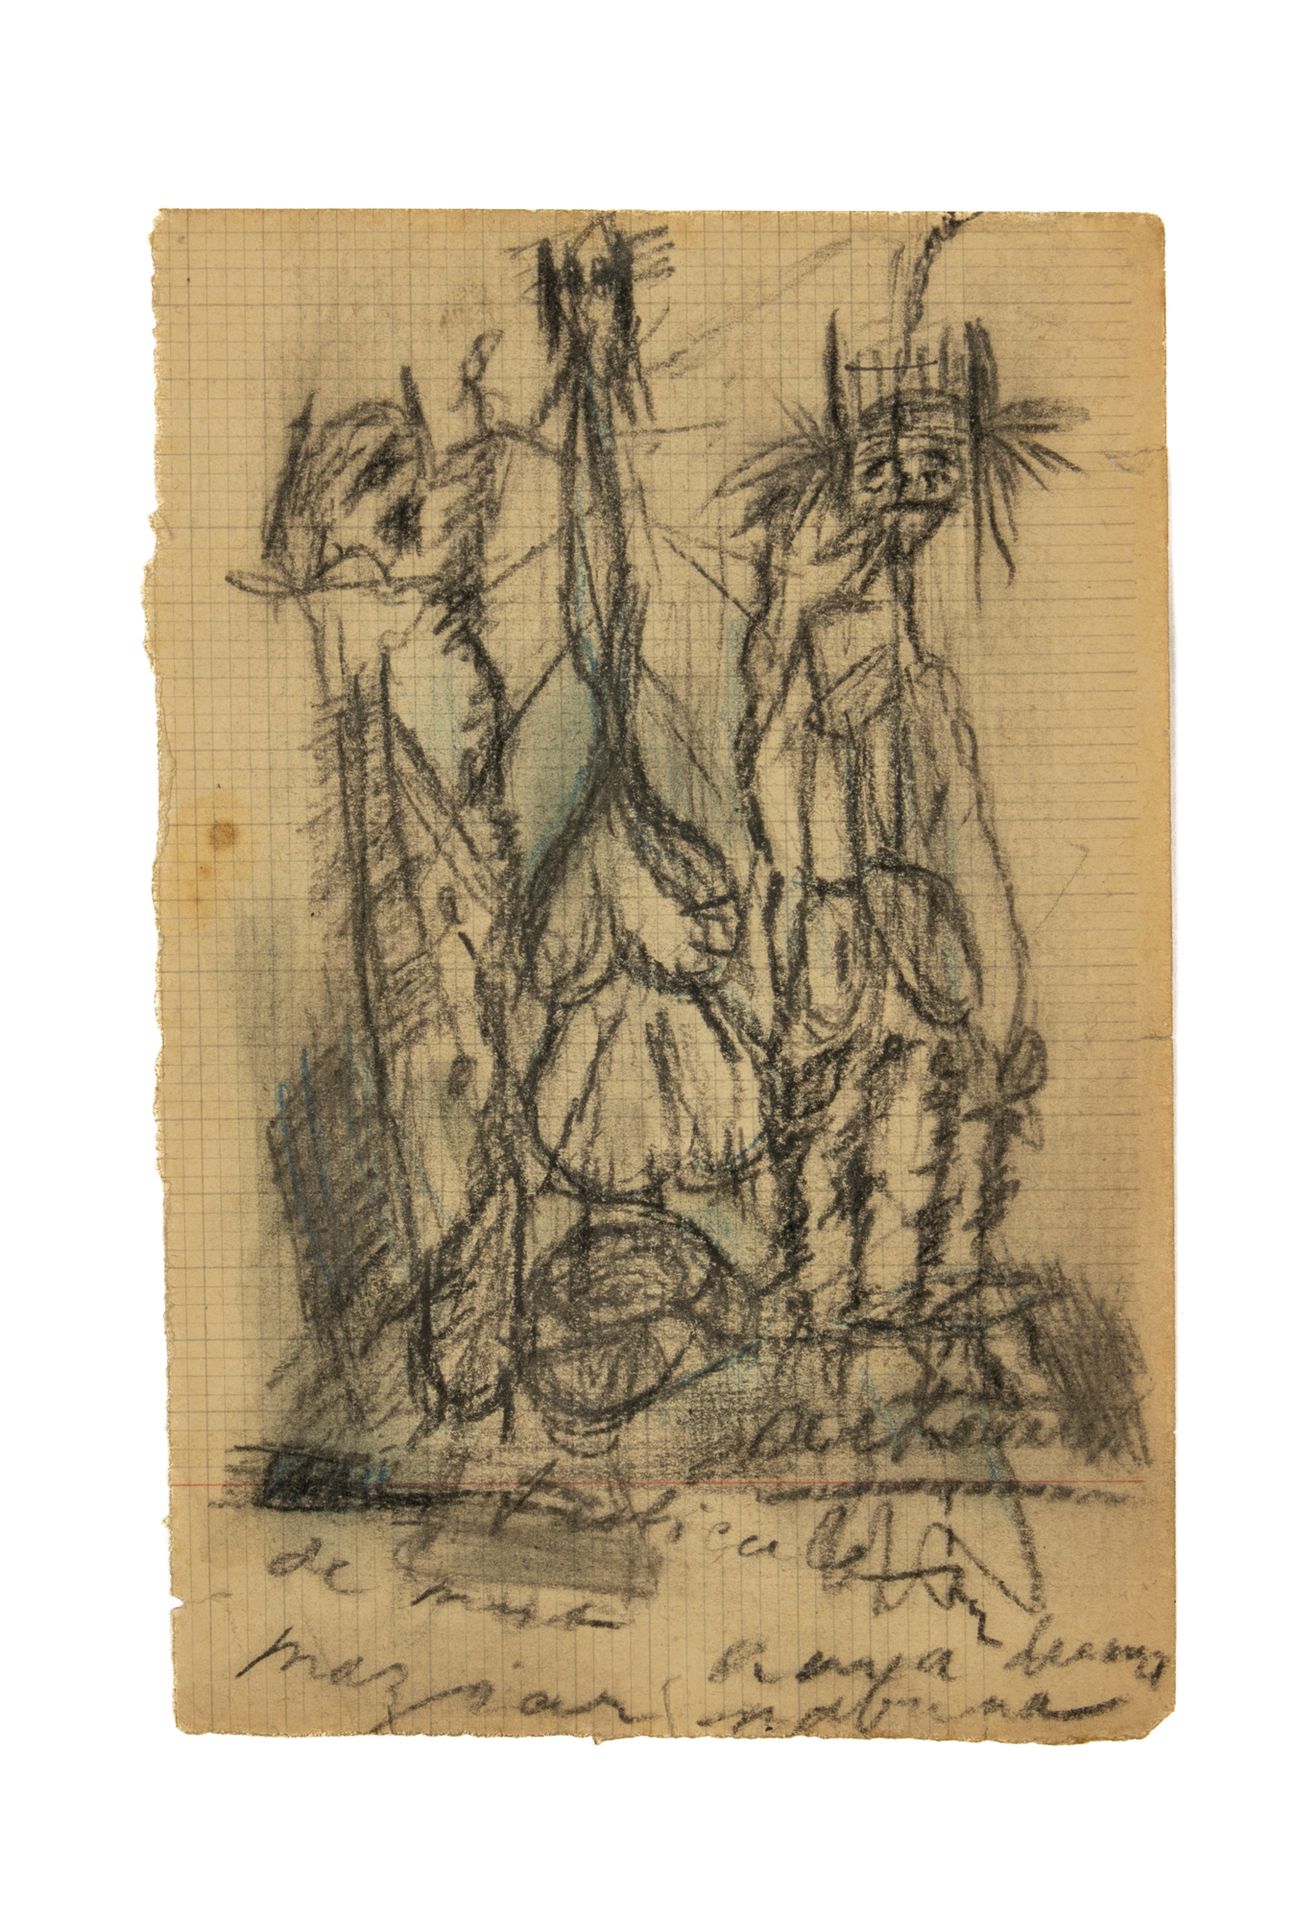 ARTAUD Antonin. Original drawing signed in black pencil on notebook page, 17 x 1&hellip;